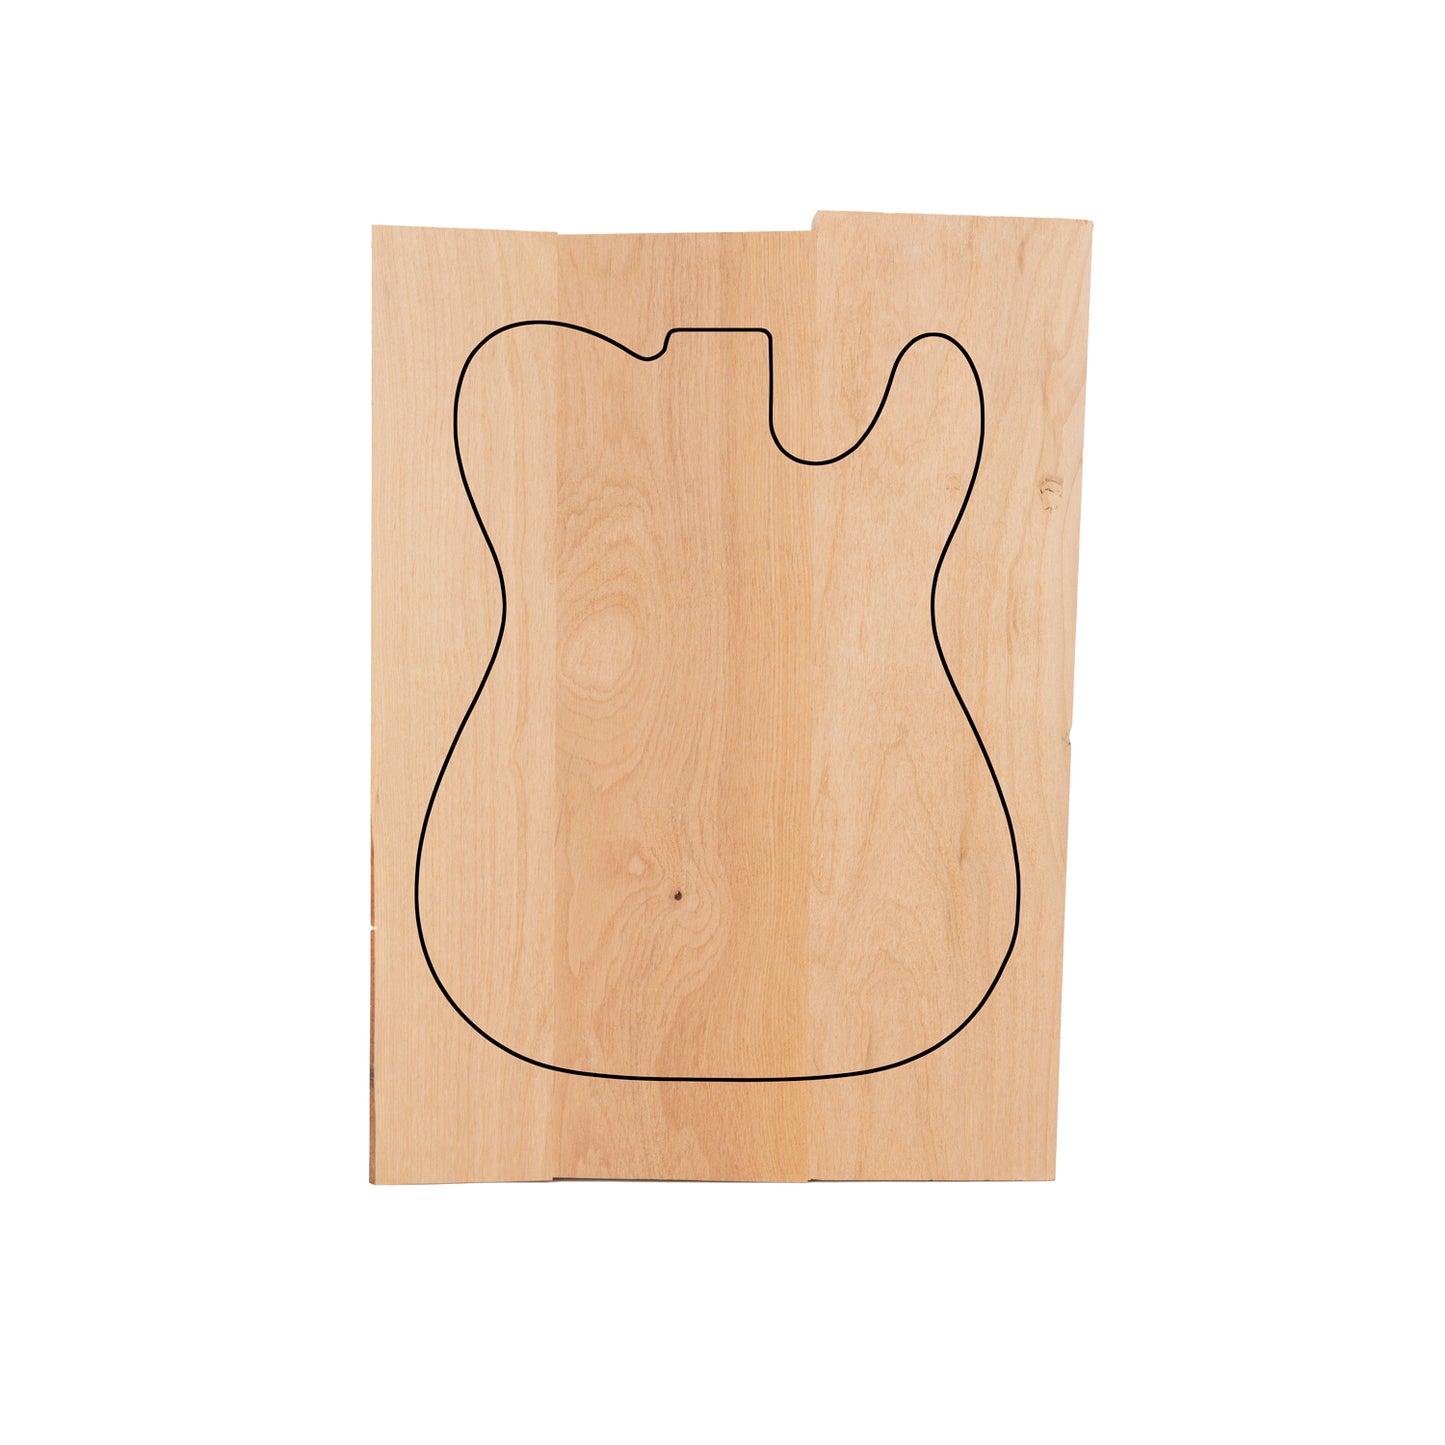 AE Guitars® Premium Alder Guitar Body Blank 3 Piece Glued Solid